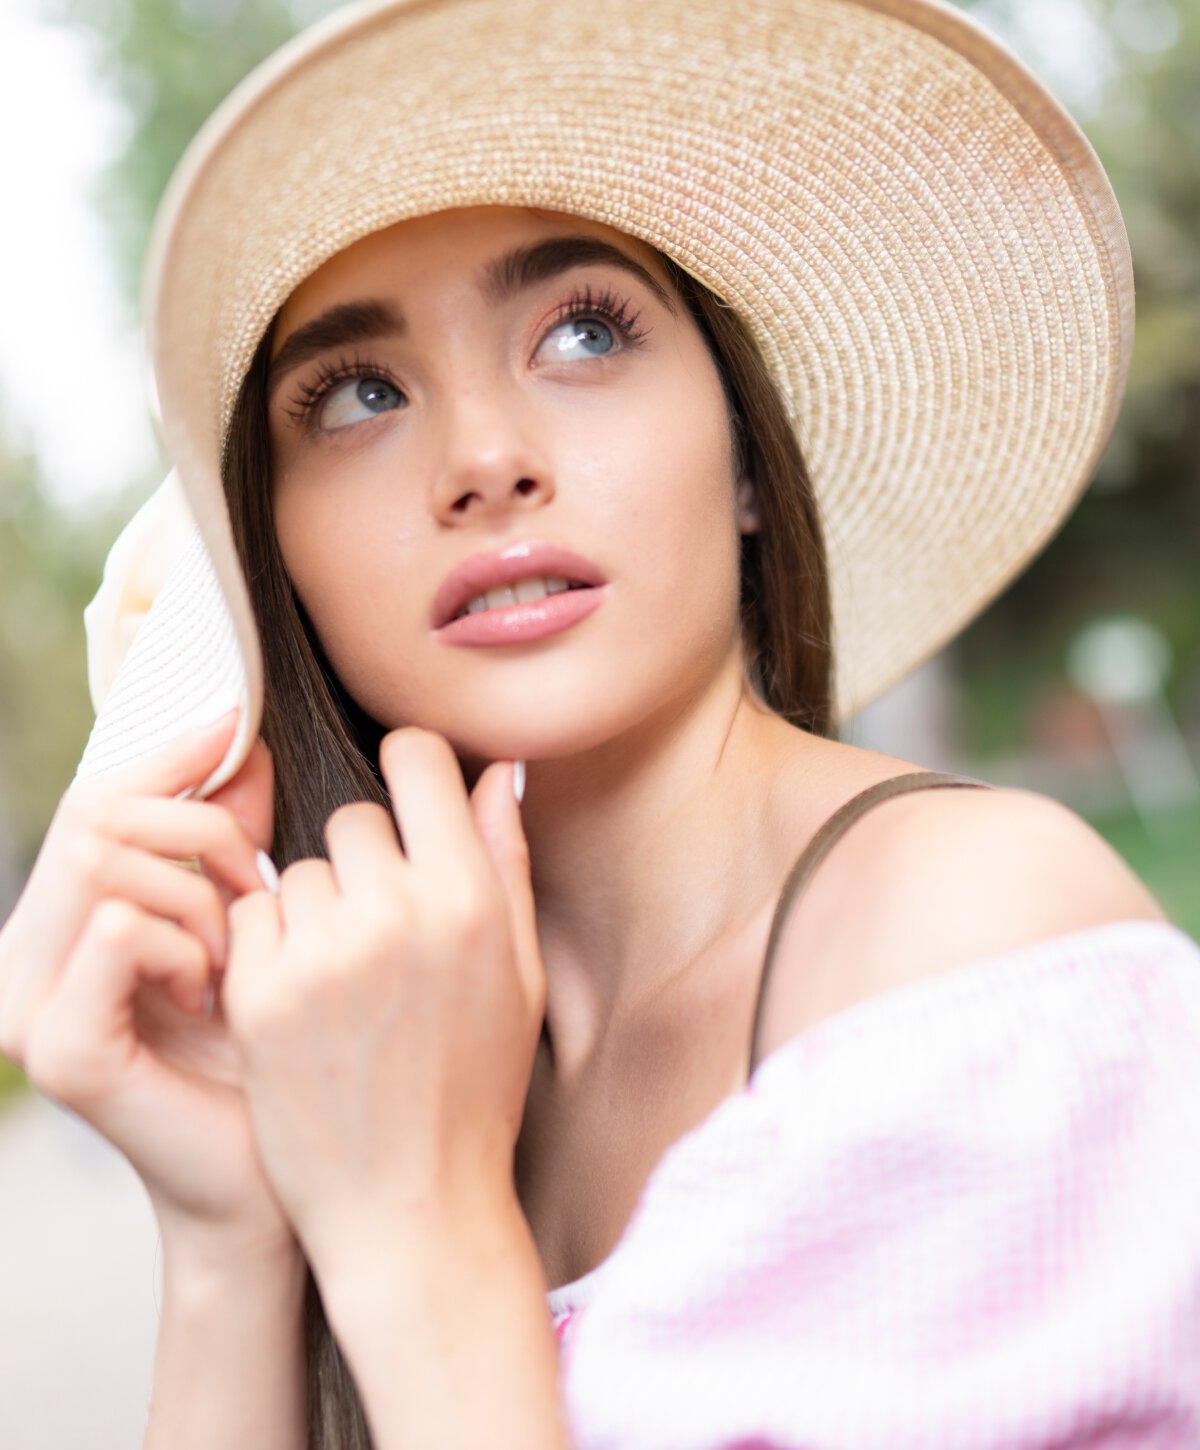 Carolina acne model with tan hat